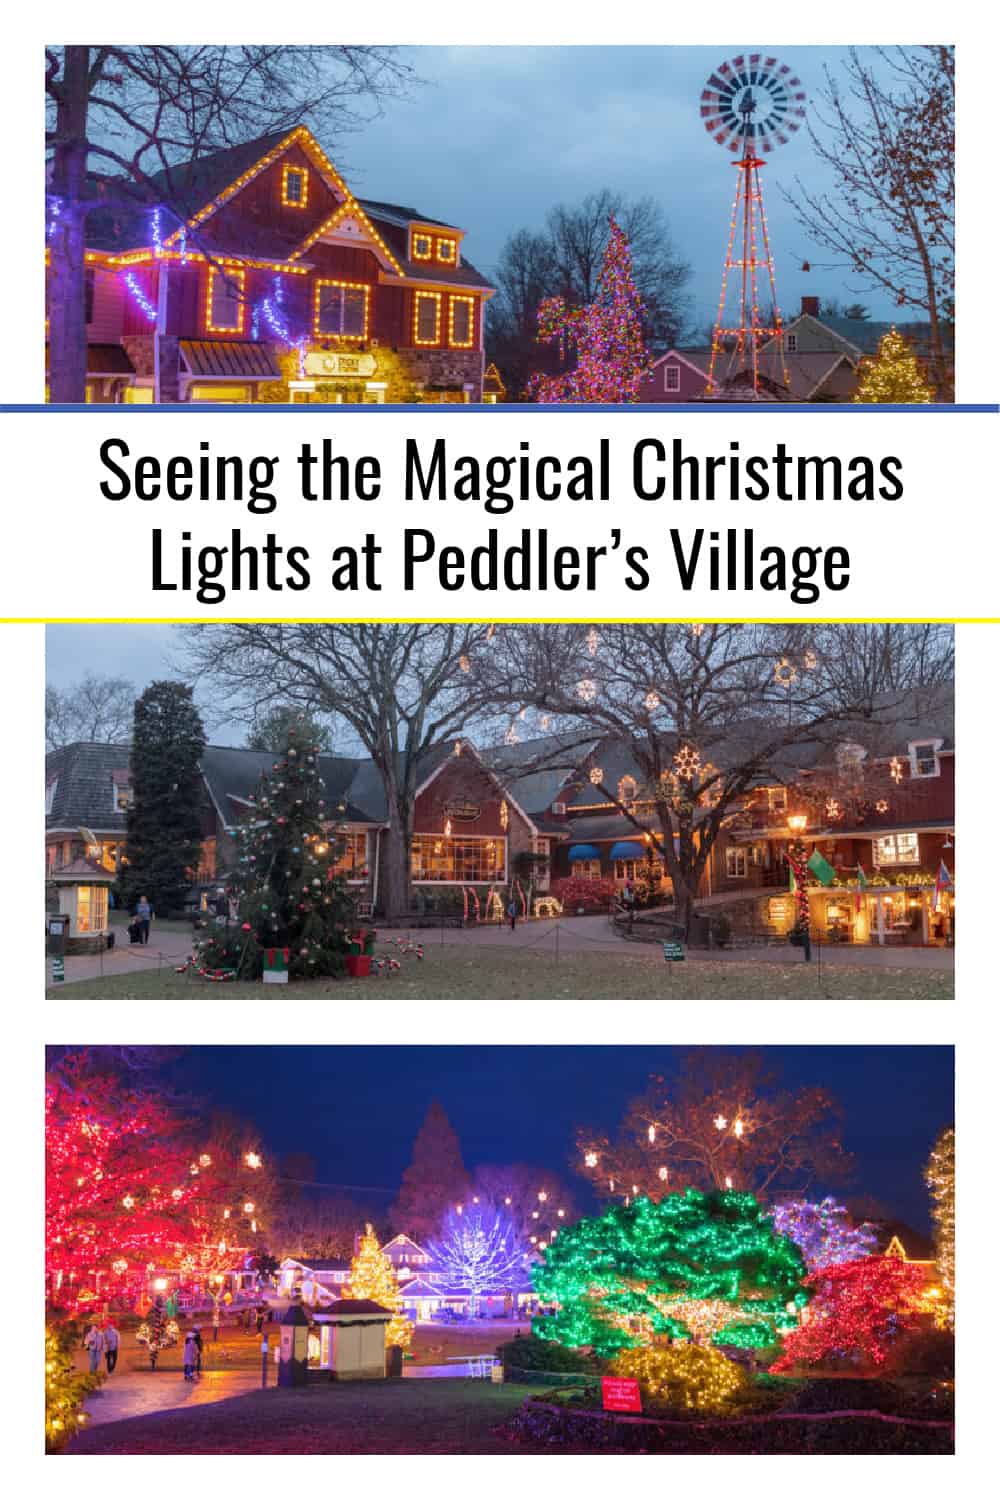 Peddlers Village Christmas Lights PinCollage 